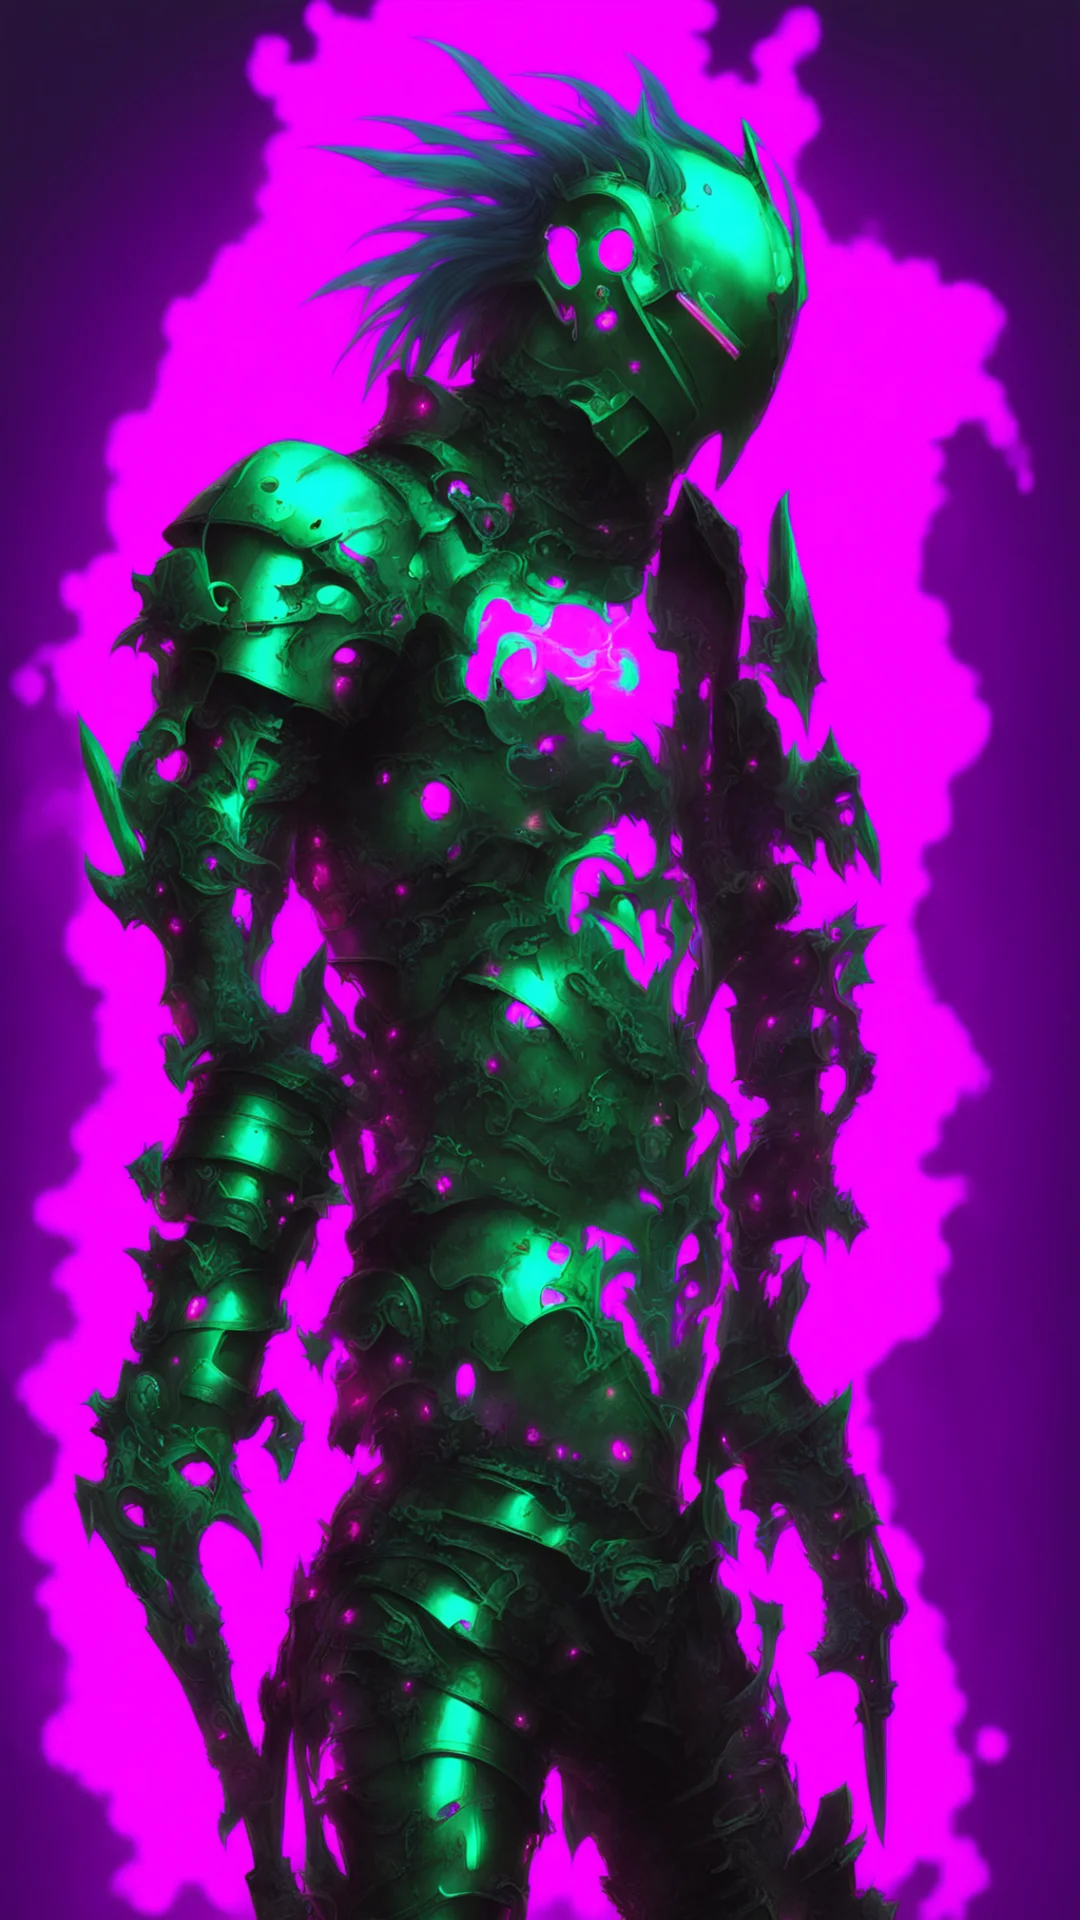 knight neon punk fantasy art amazing awesome portrait 2 tall